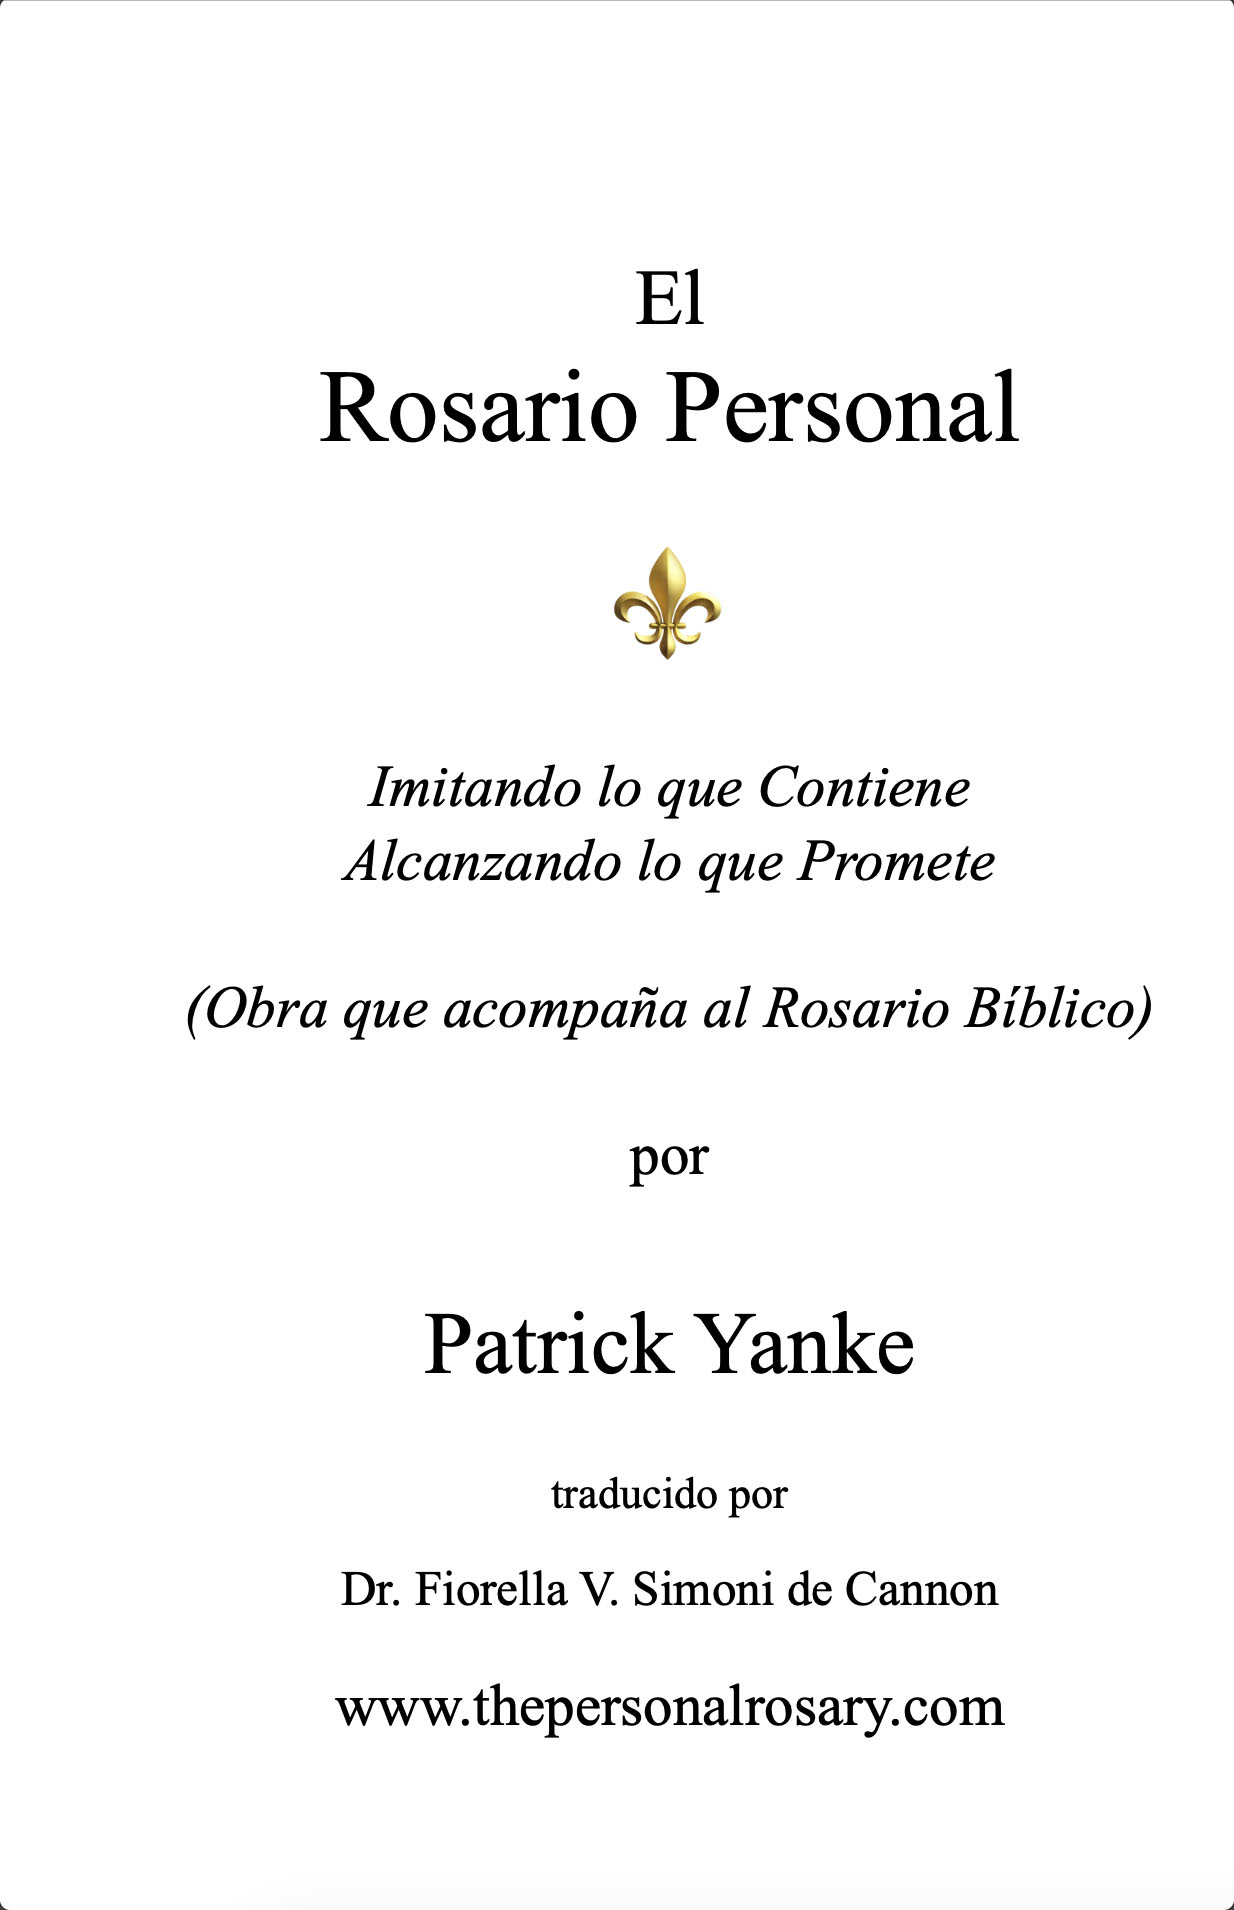 Personal Rosary - Spanish